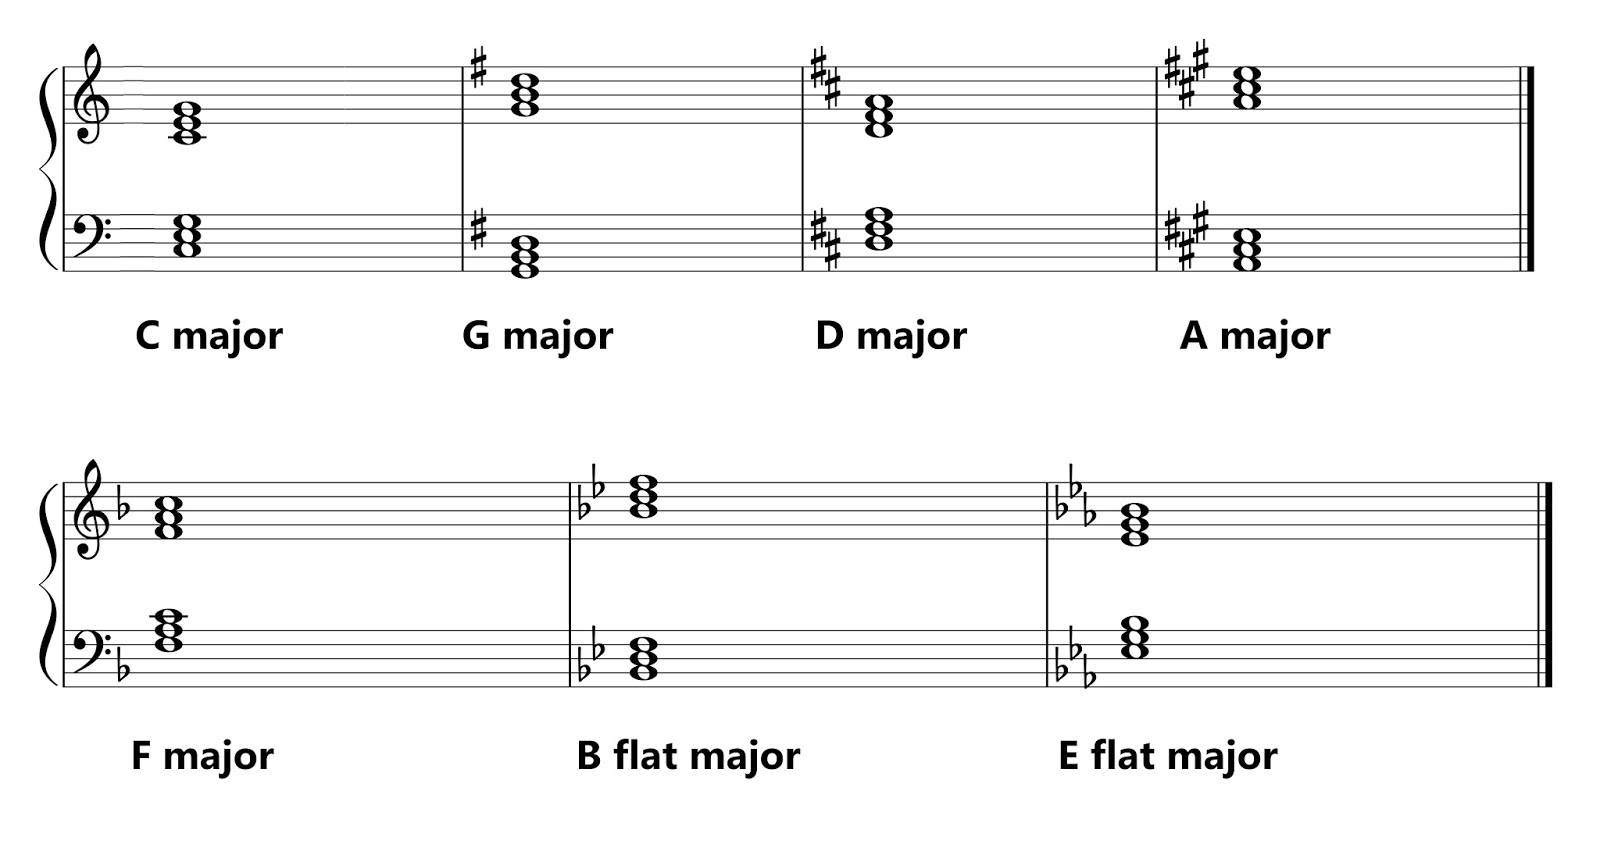 B flat major. Major Key Harmonizeds. A Flat Major Notes written out. E Major Triad Notes.